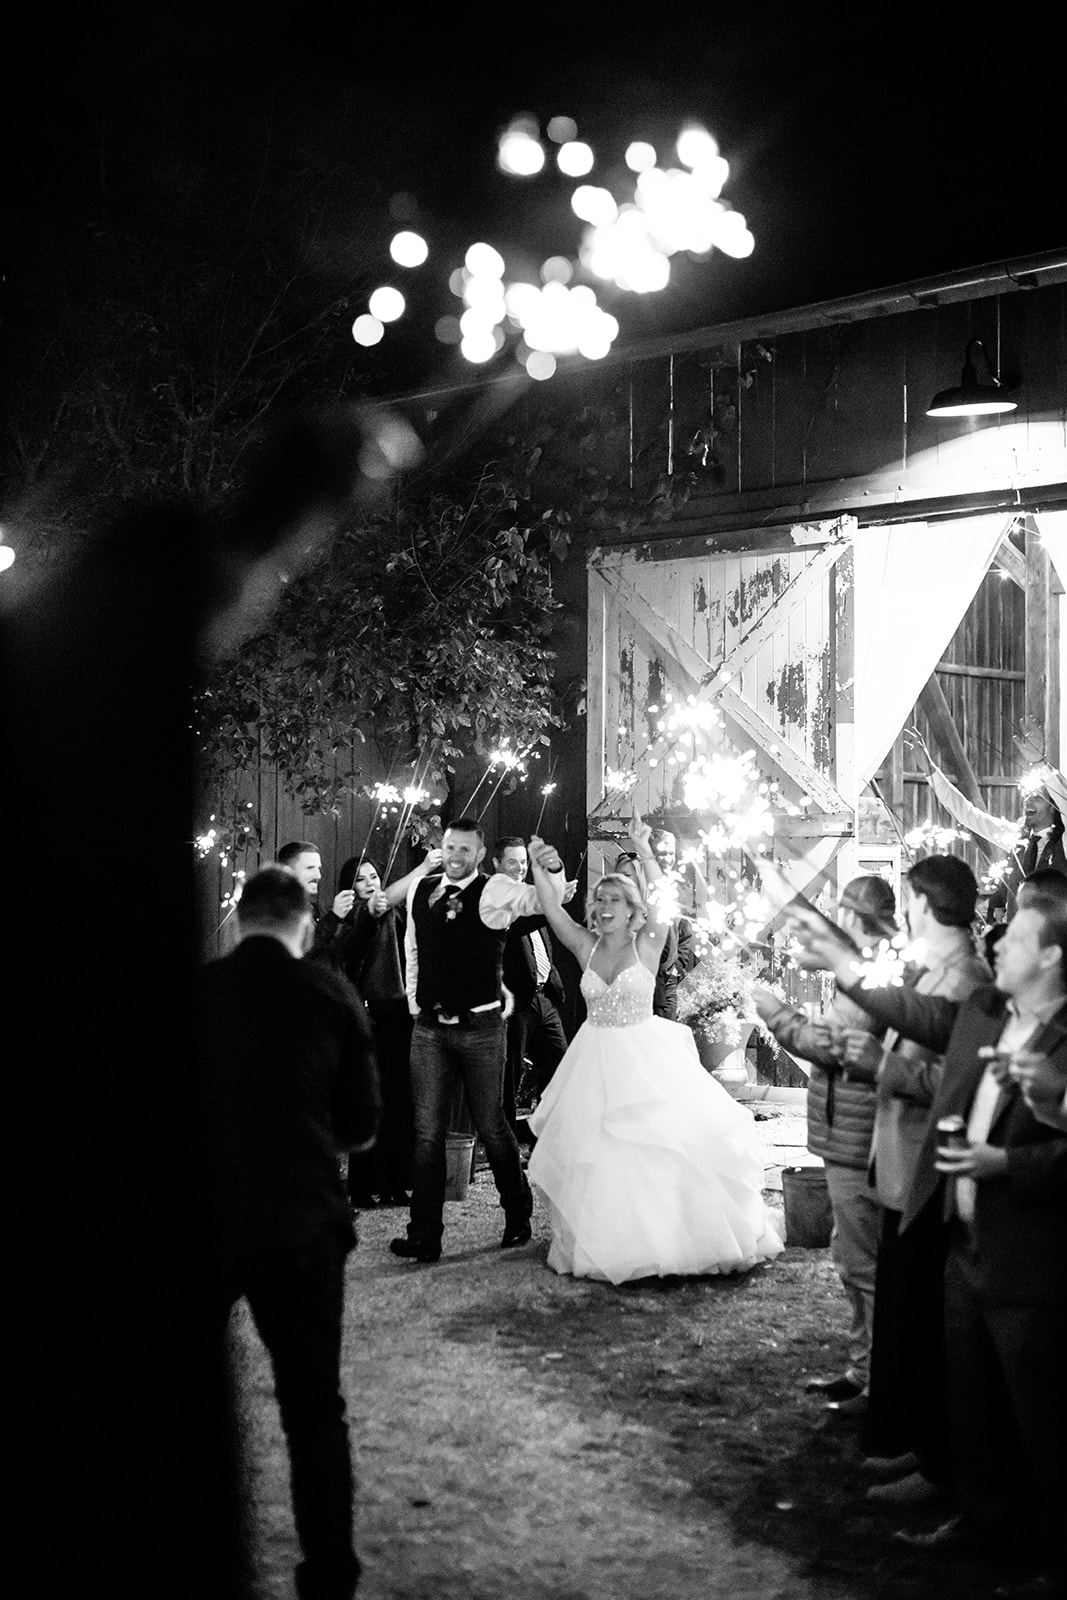 Kateland  Johns Wedding at Winding Creek Farm - Image Property of www.j-dphoto.com